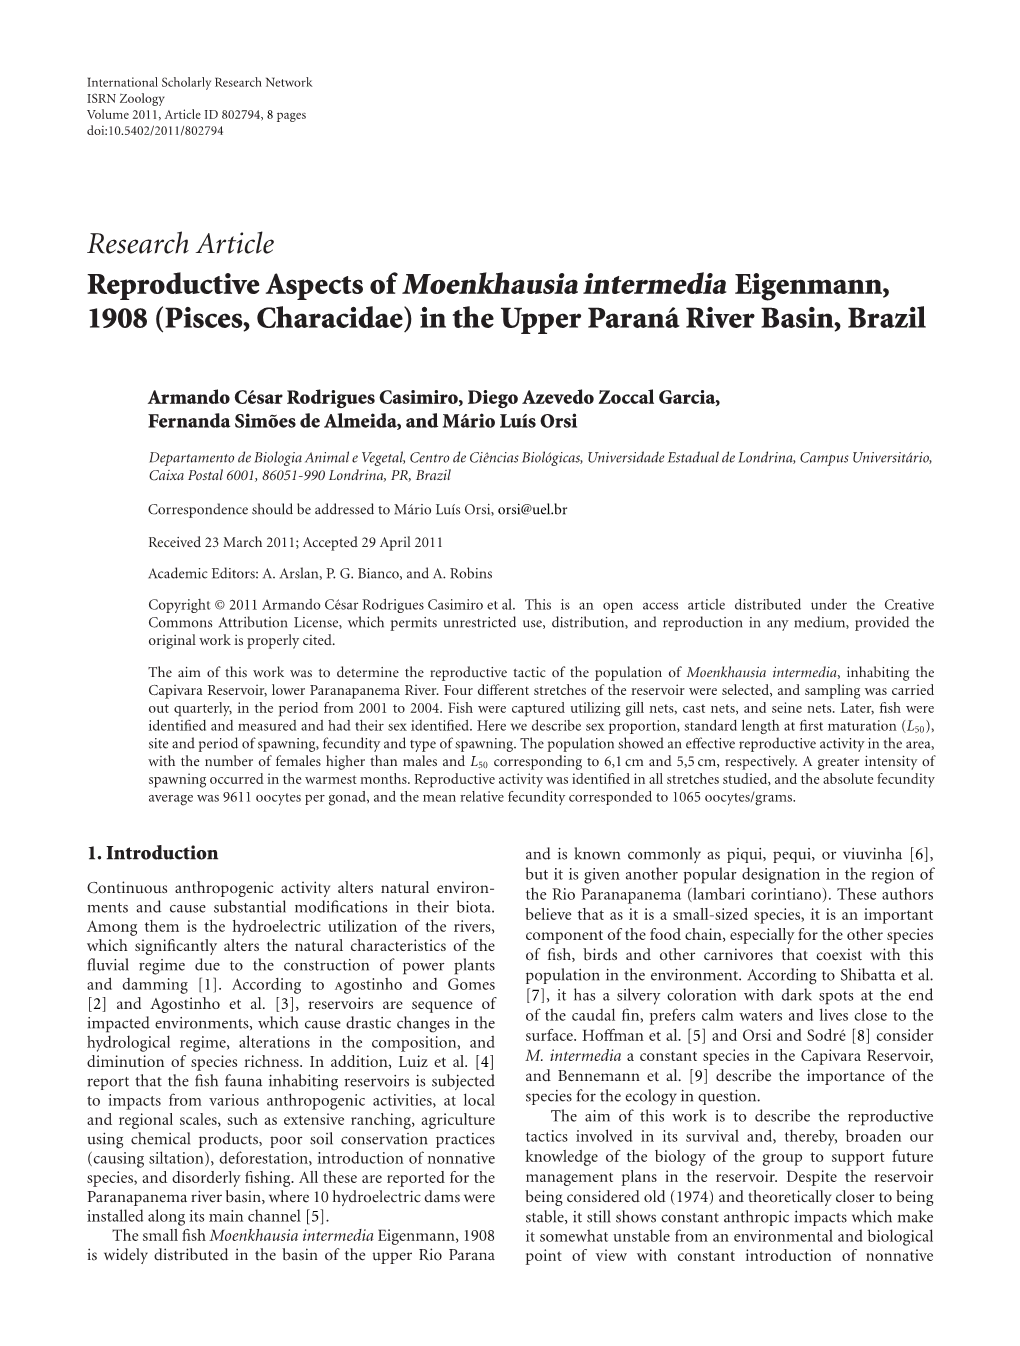 Reproductive Aspects of Moenkhausia Intermedia Eigenmann, 1908 (Pisces, Characidae) in the Upper Paranariverbasin,Brazil´